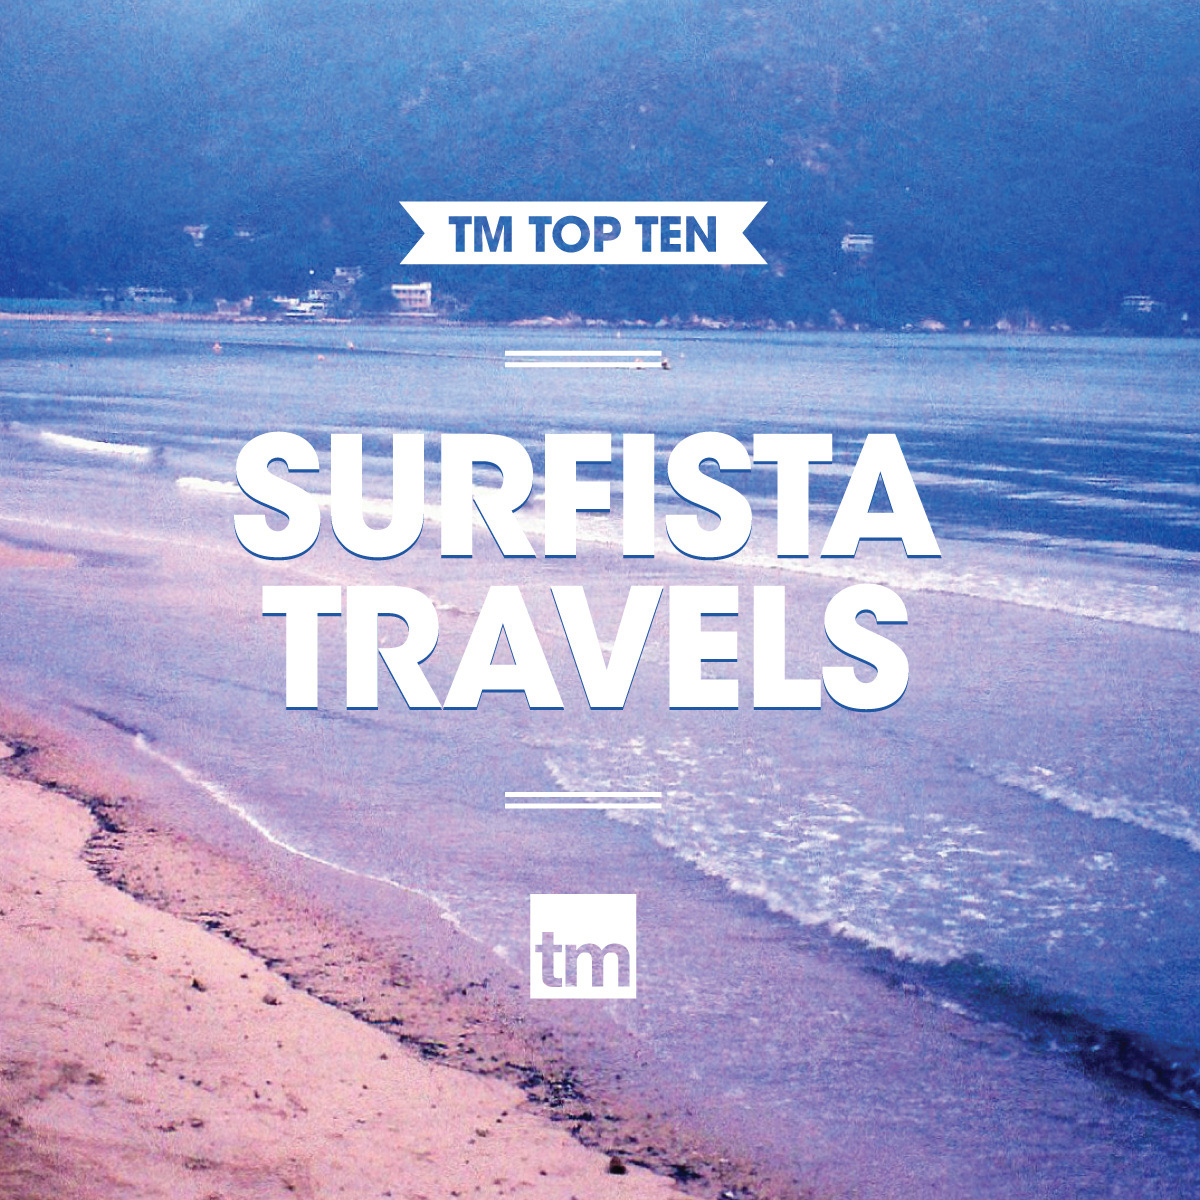 TM-TOP-10-surfista-travels_thumbnail-01